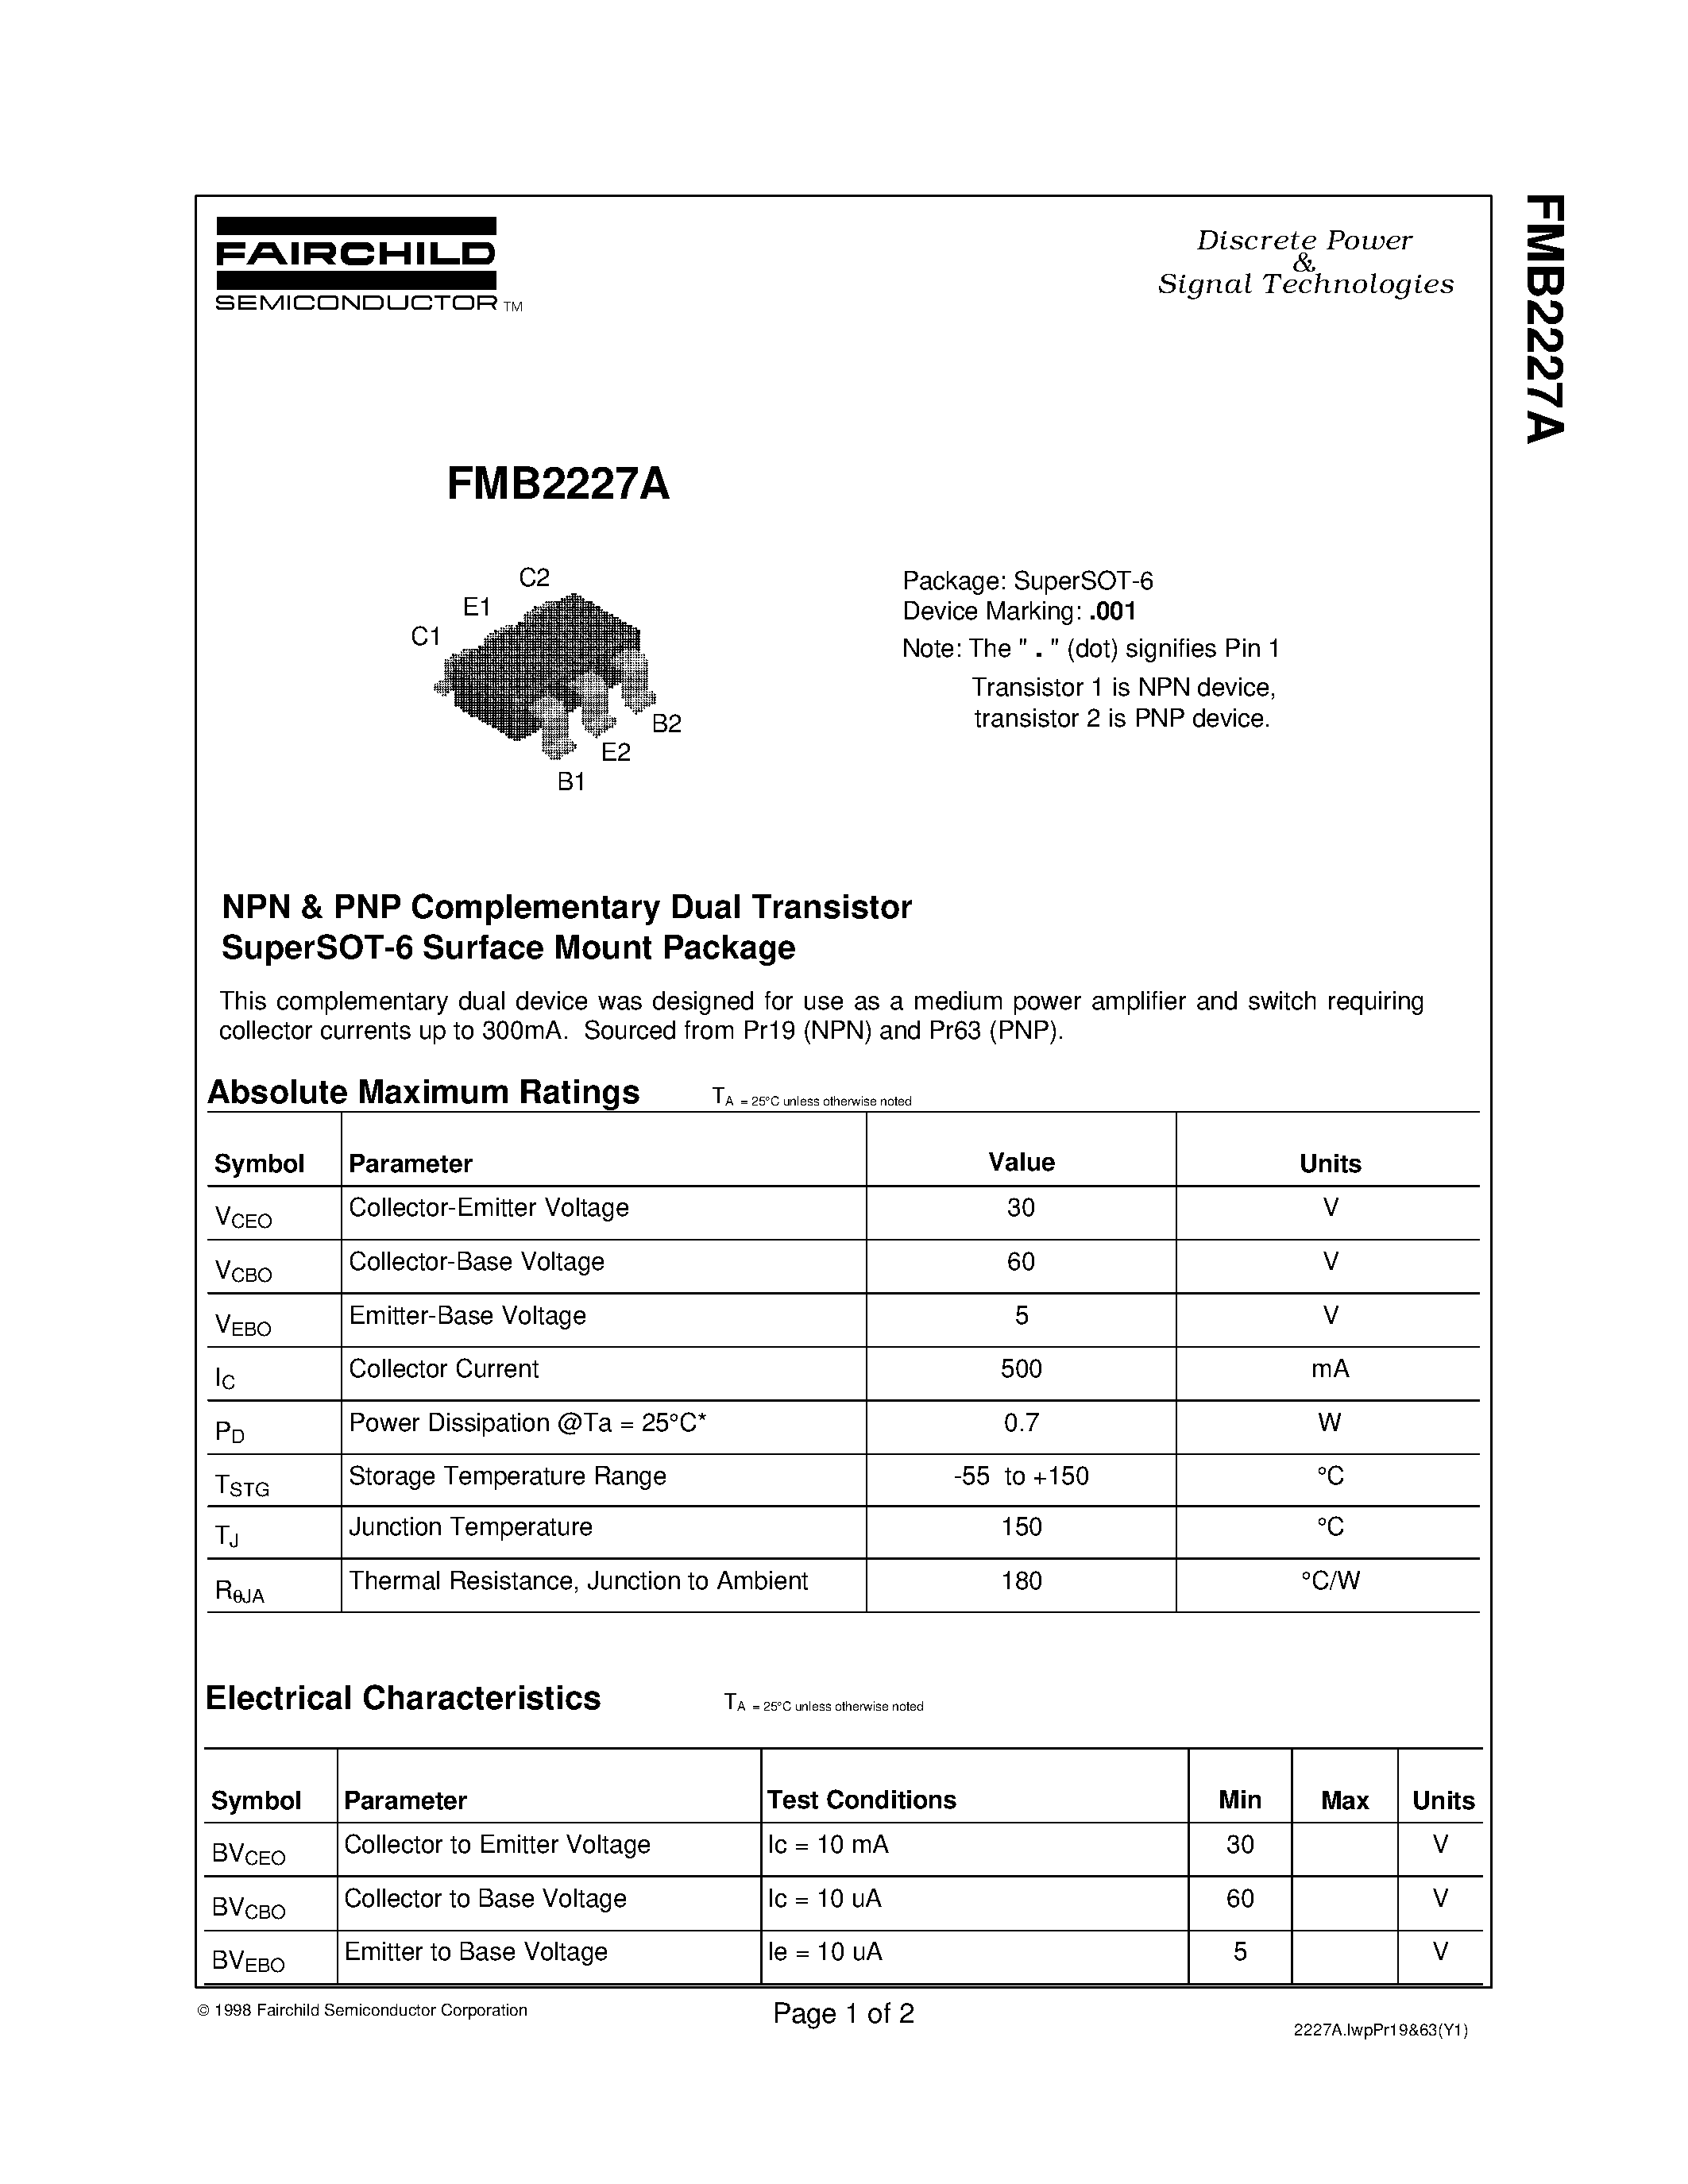 Datasheet FMB2227A - NPN & PNP General Purpose Amplifier page 1